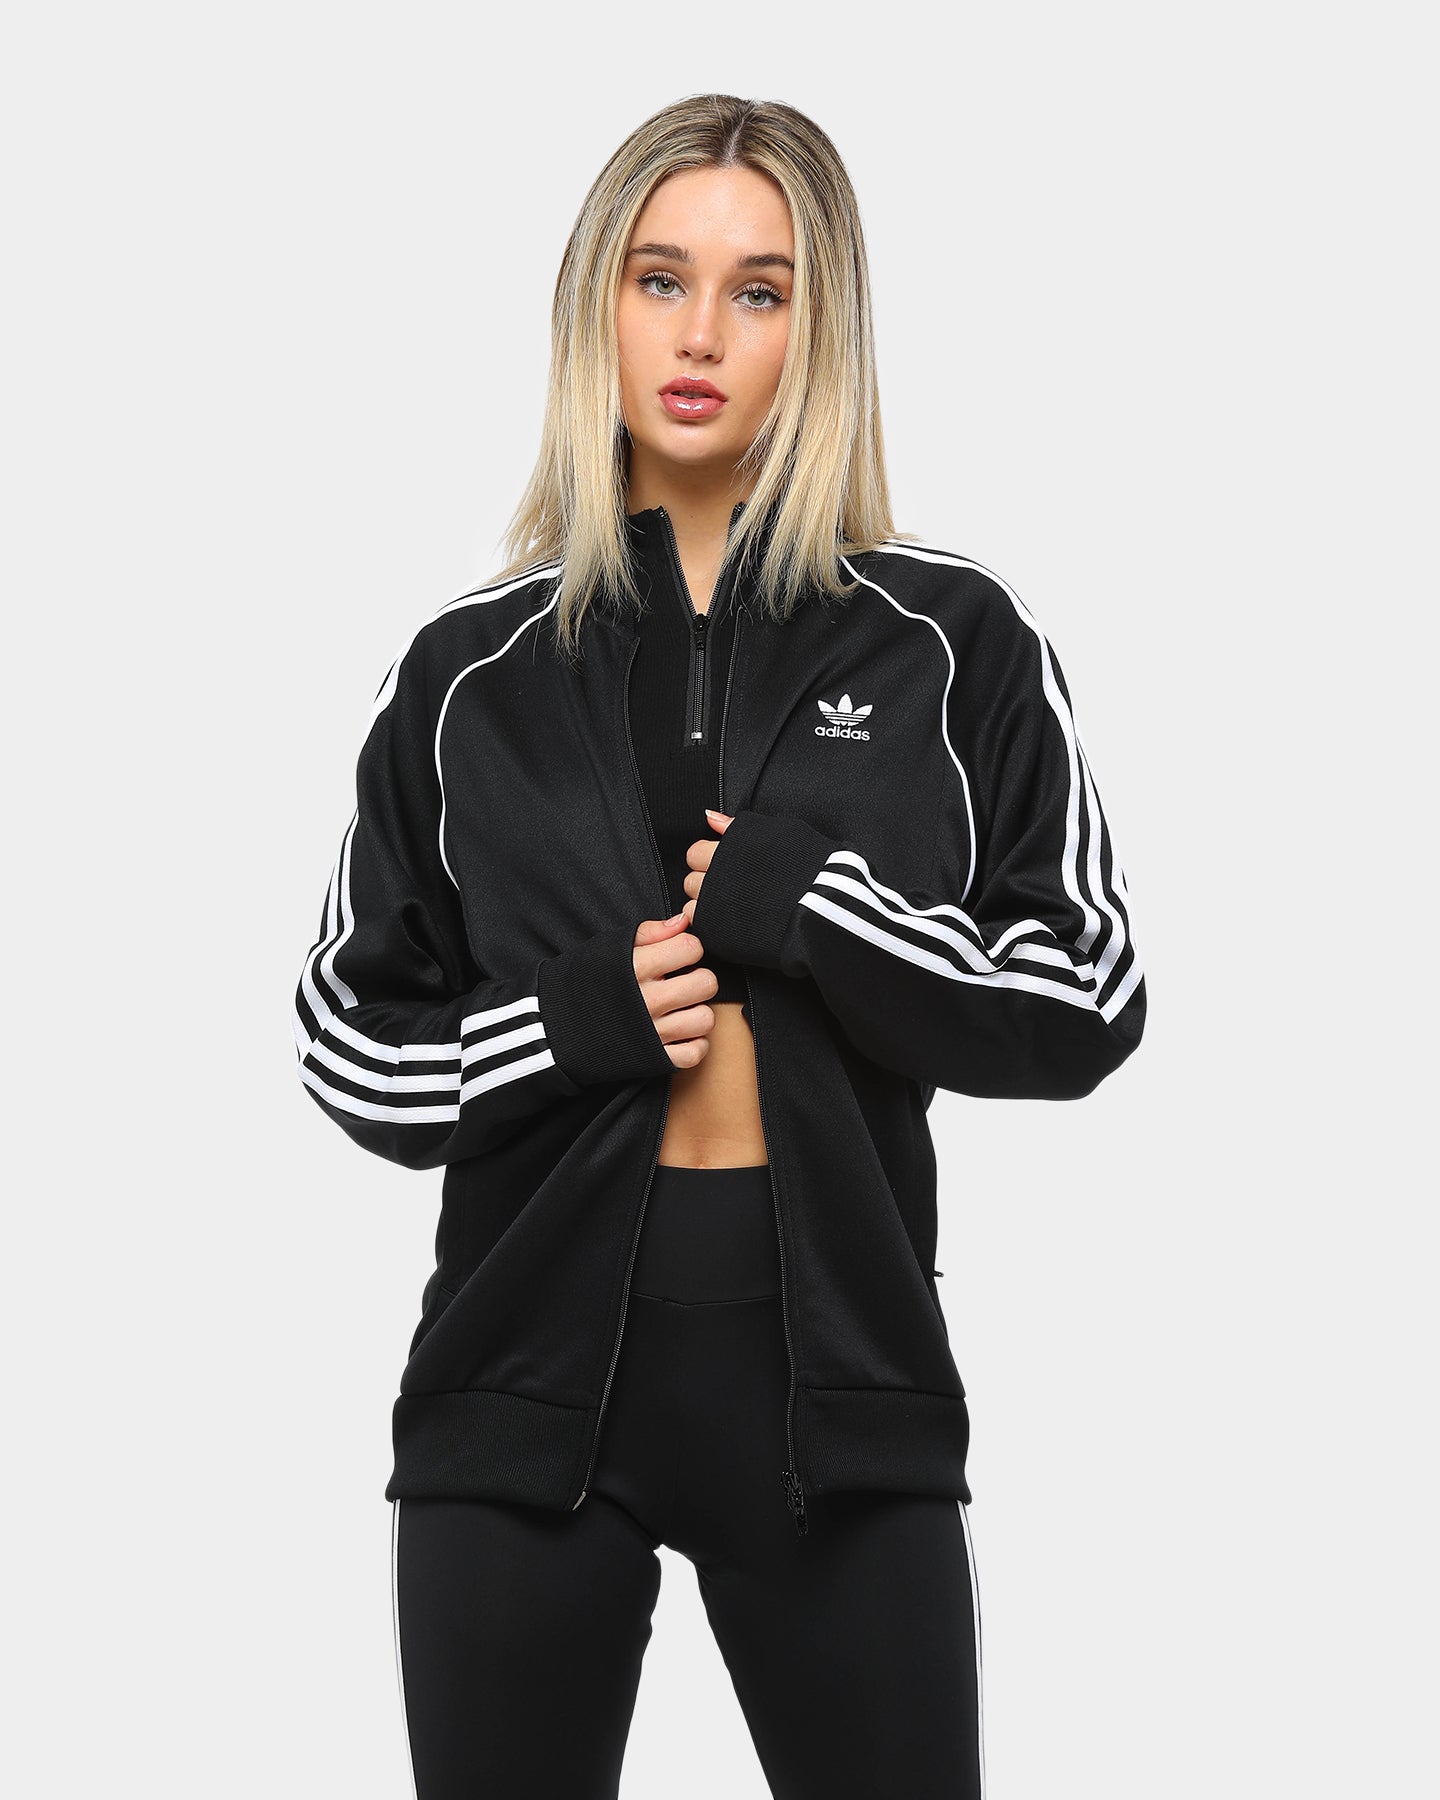 adidas sst track jacket women's black